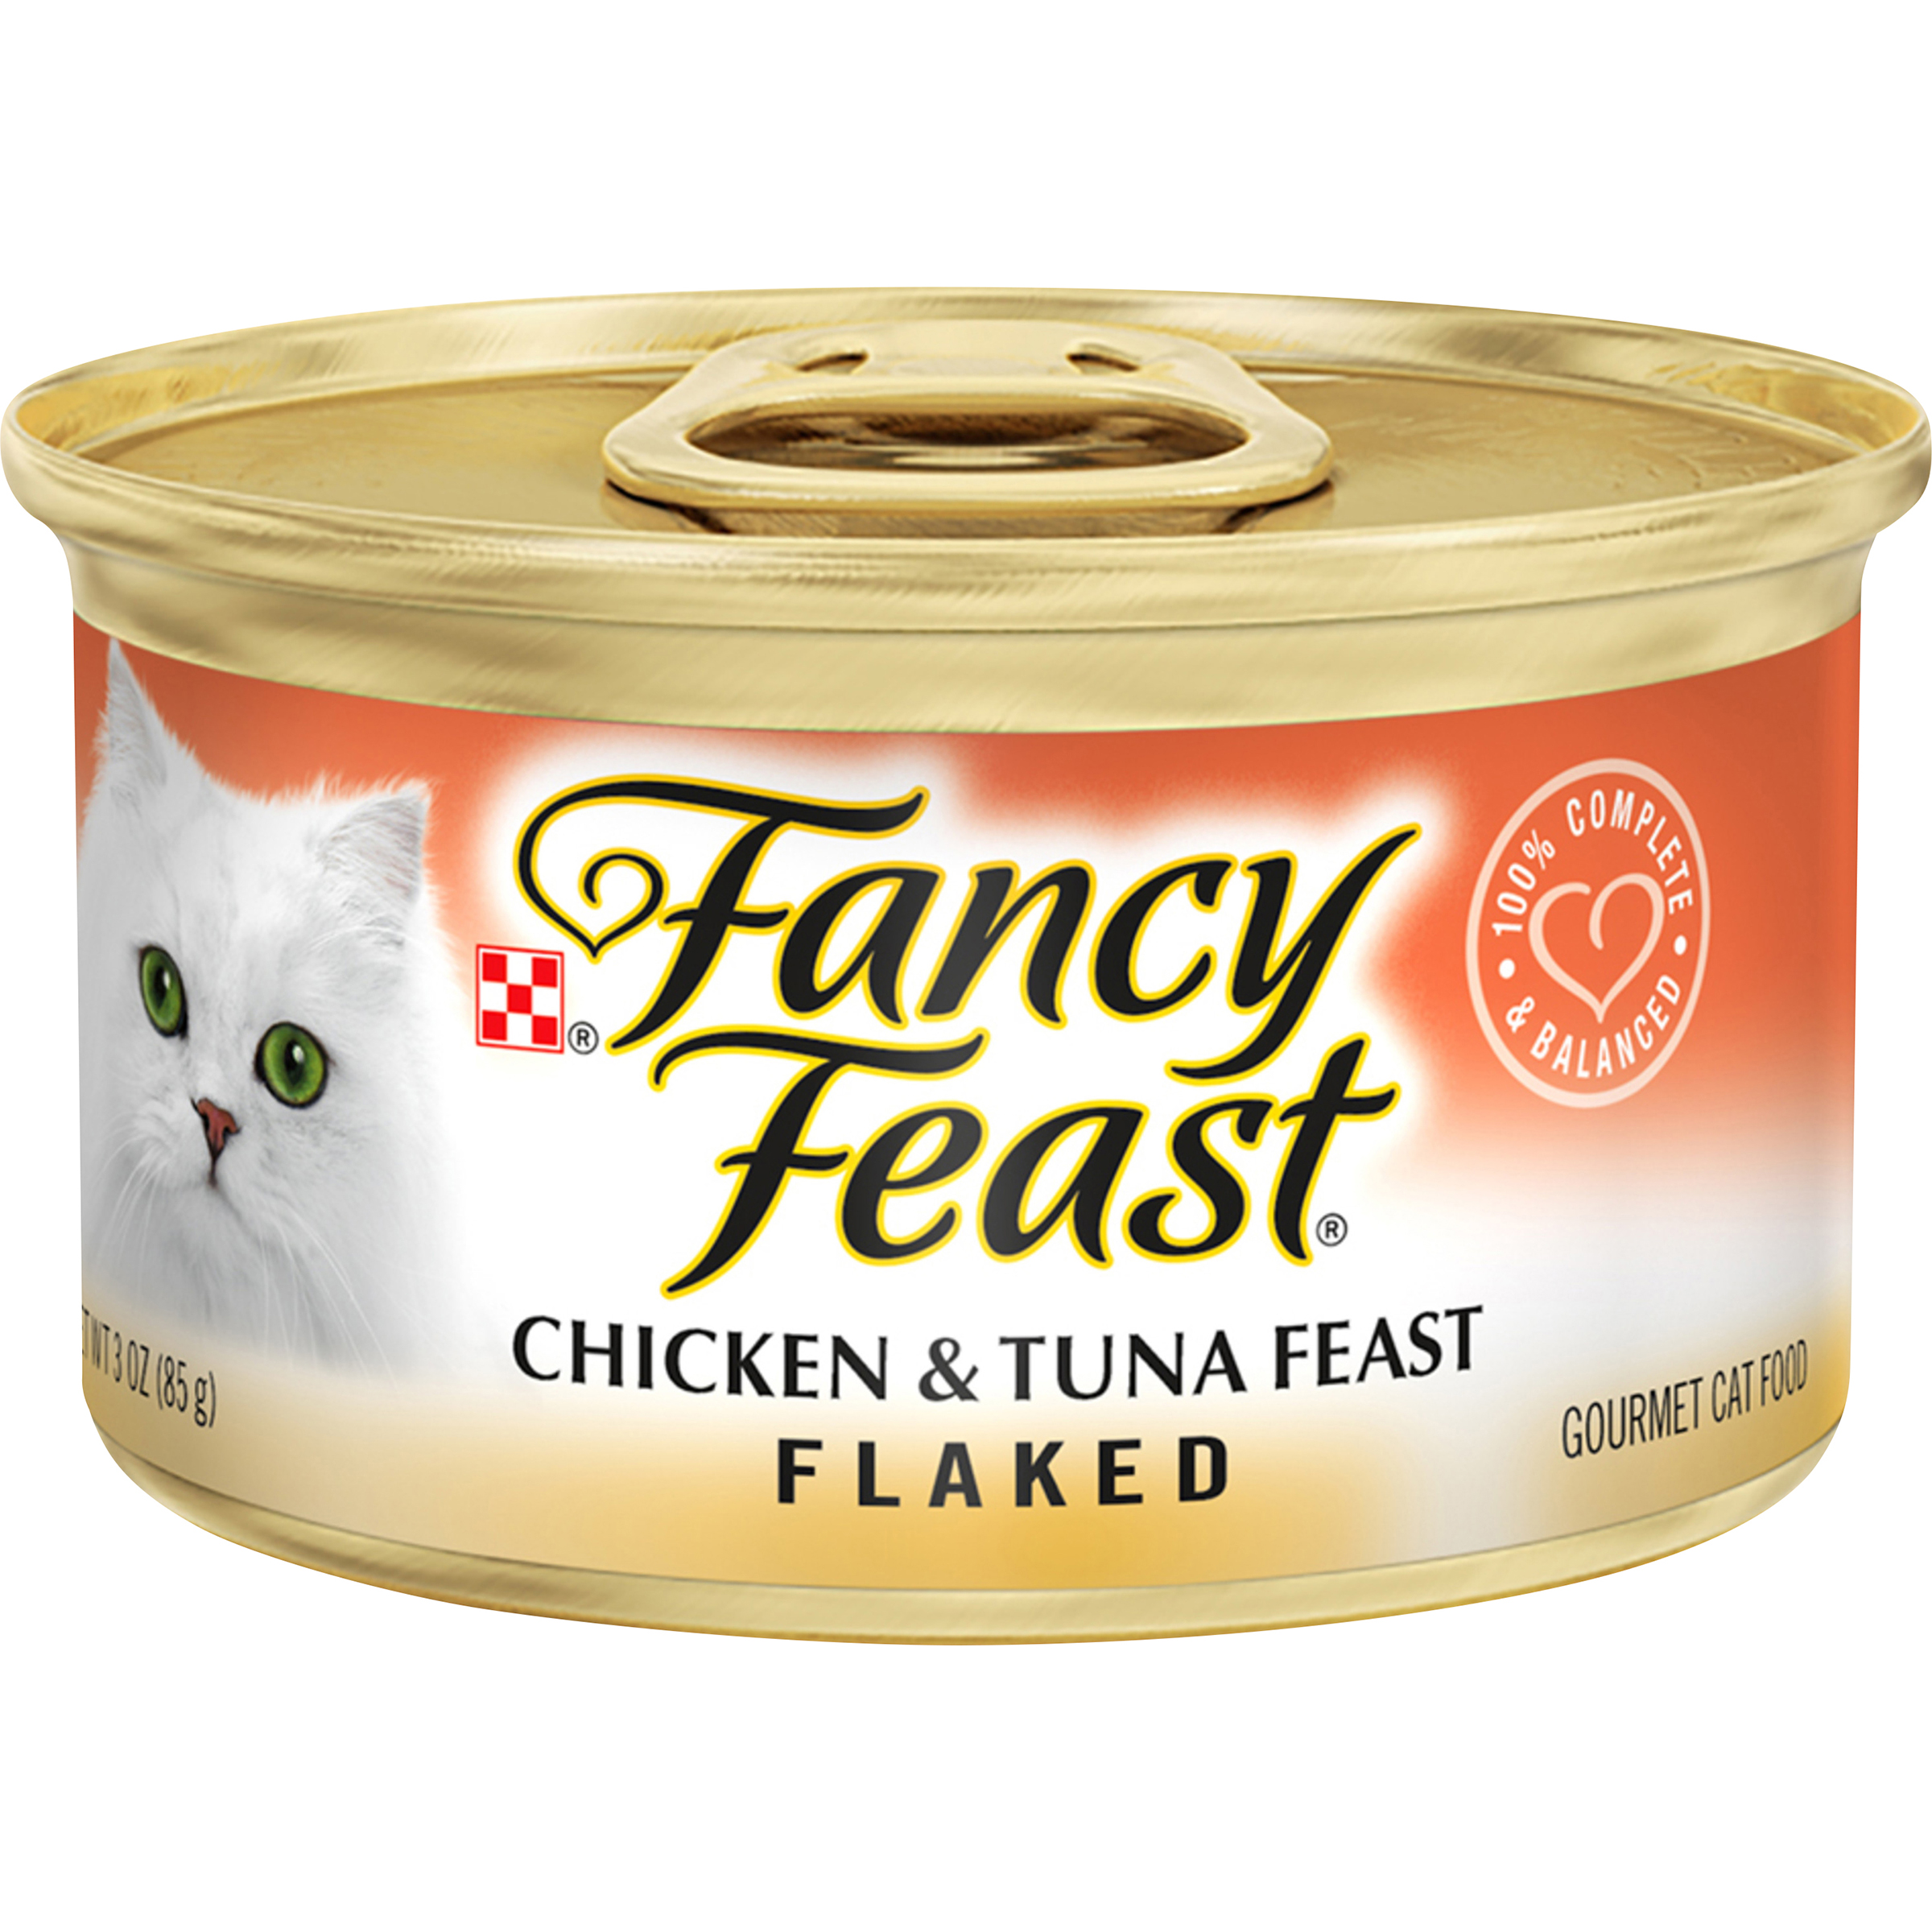 Fancy Feast Flaked Chicken & Tuna Feast, Cat Food, 3 fl oz